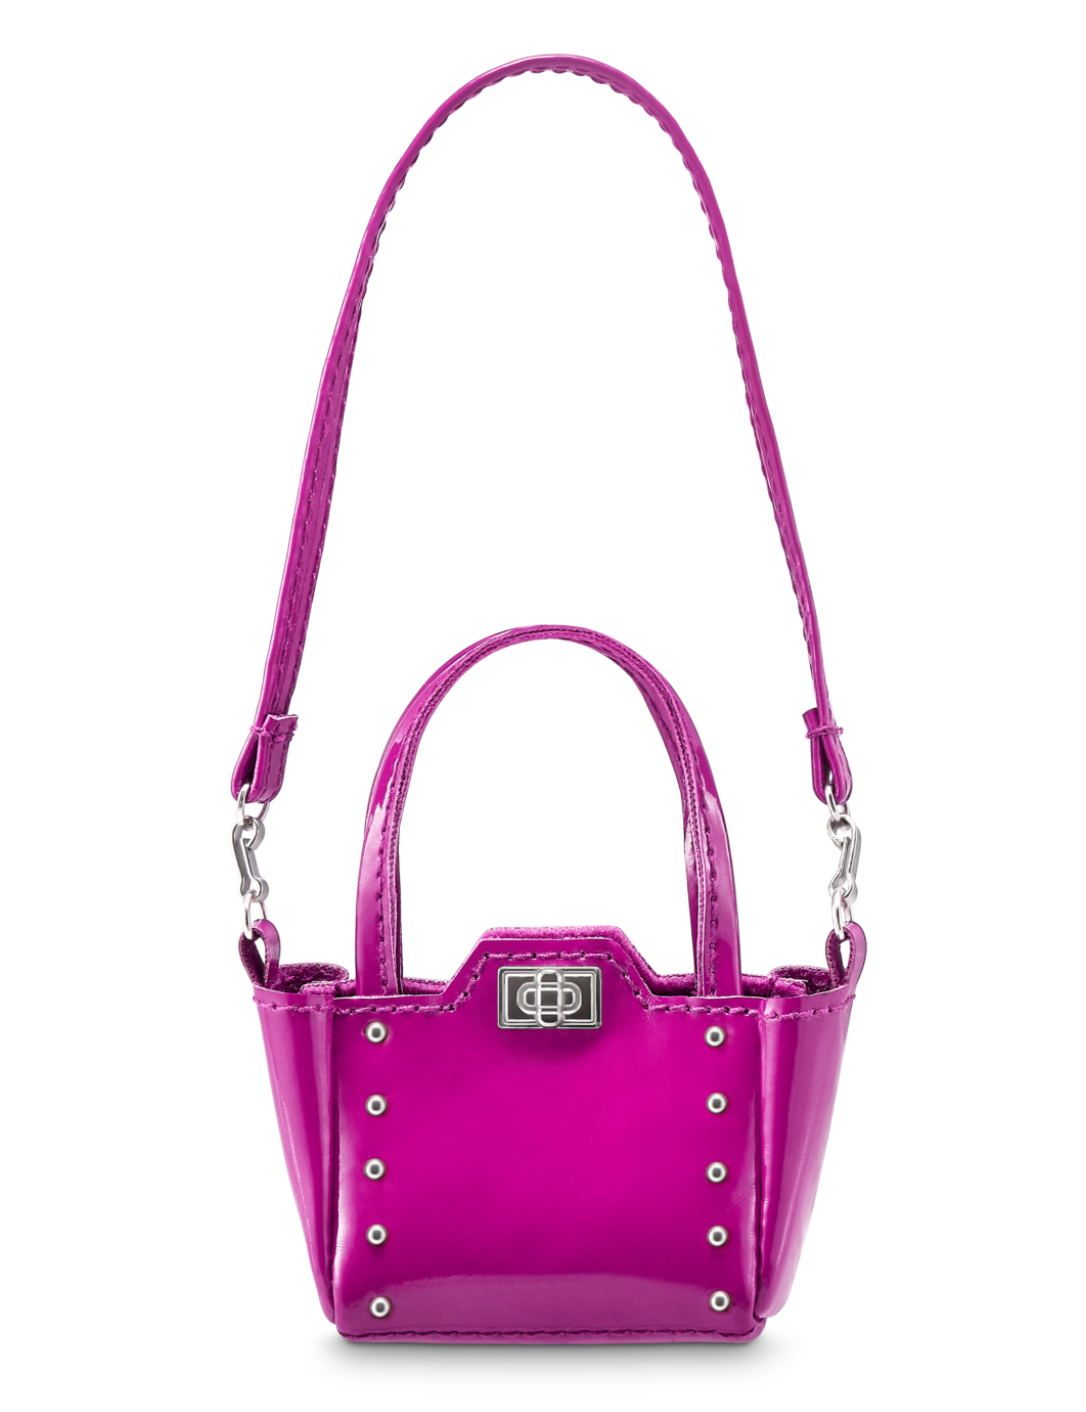 ZURU Mini Fashion Doll Purple Handbag